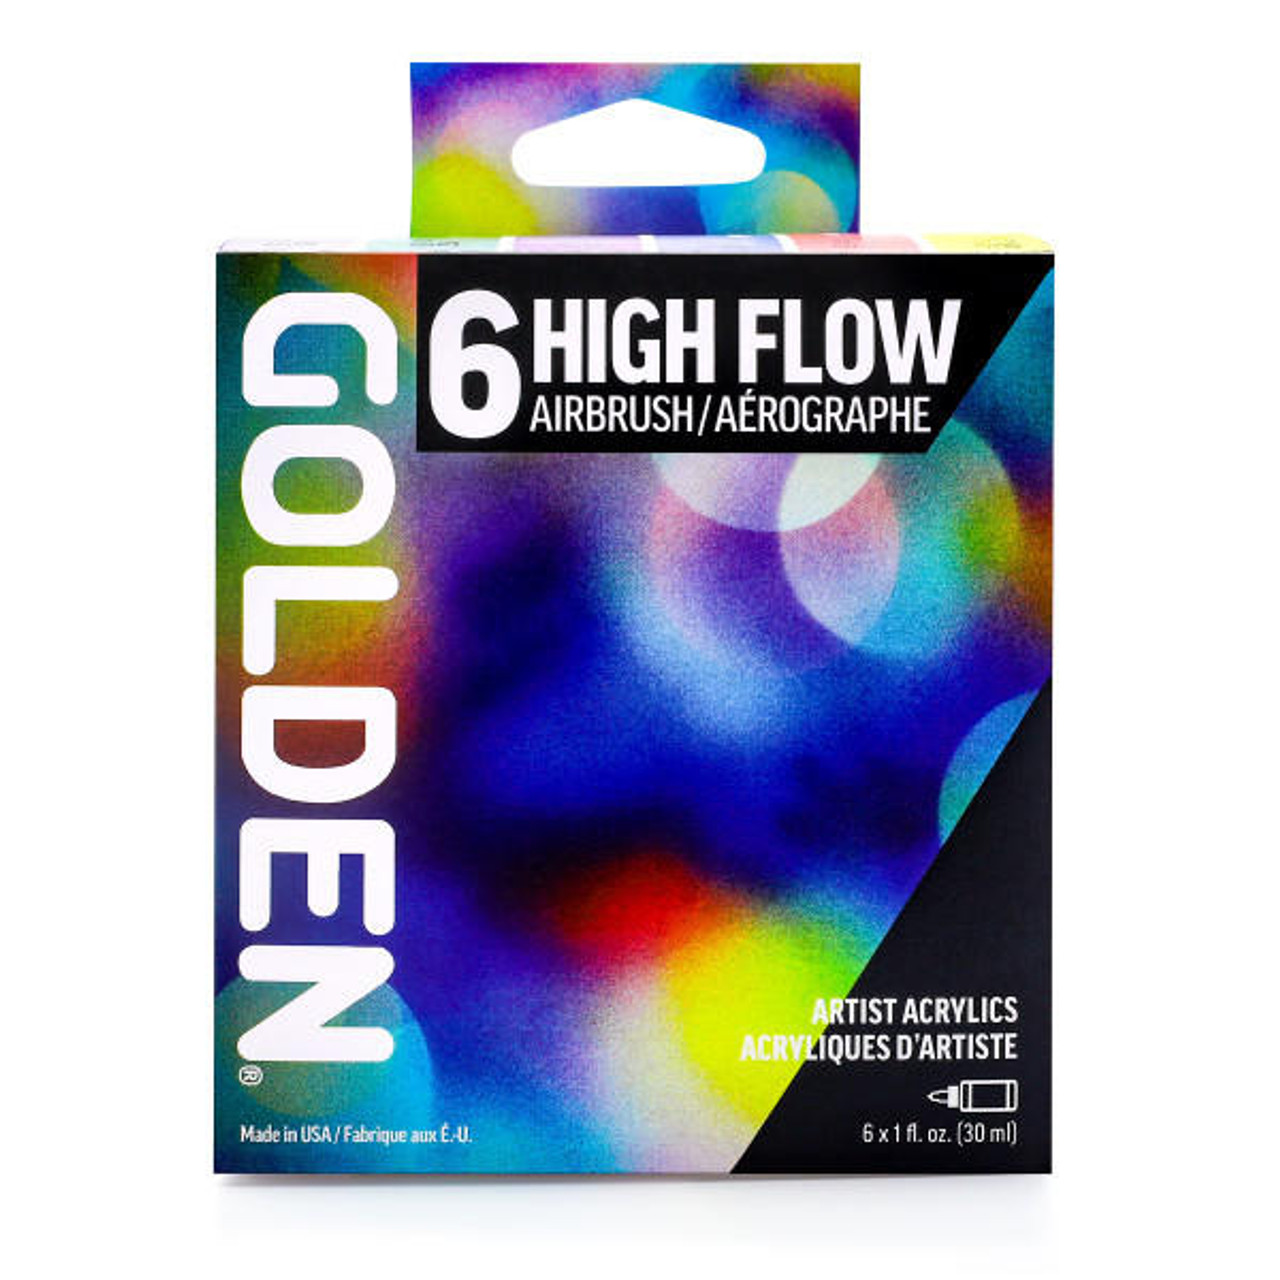 Golden High Flow Acrylic - Transparent Dioxazine Purple 1 oz.